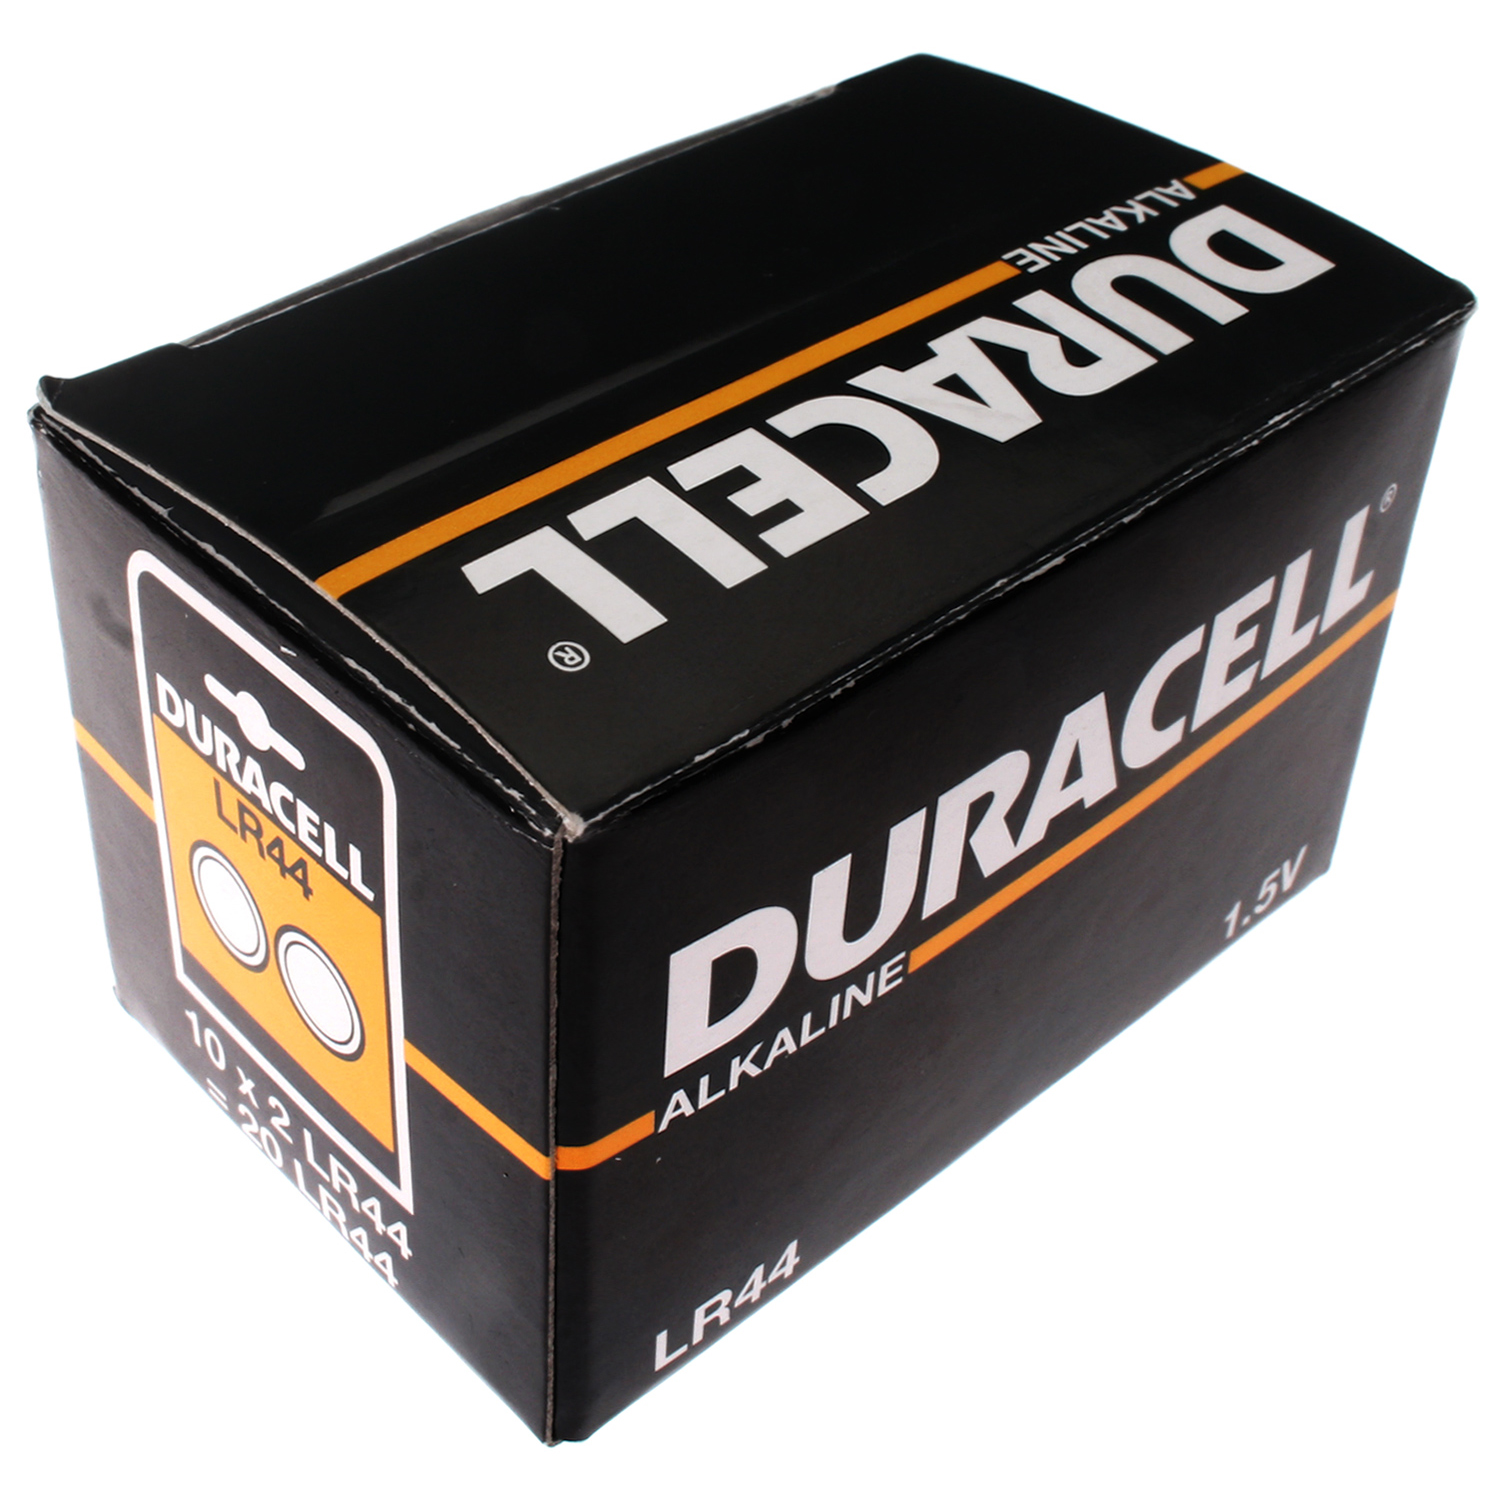 Duracell LR 44 AG 13 SG 13 SR 44 a 76 S 76 EPX 76 Alkaline Batteries X 20